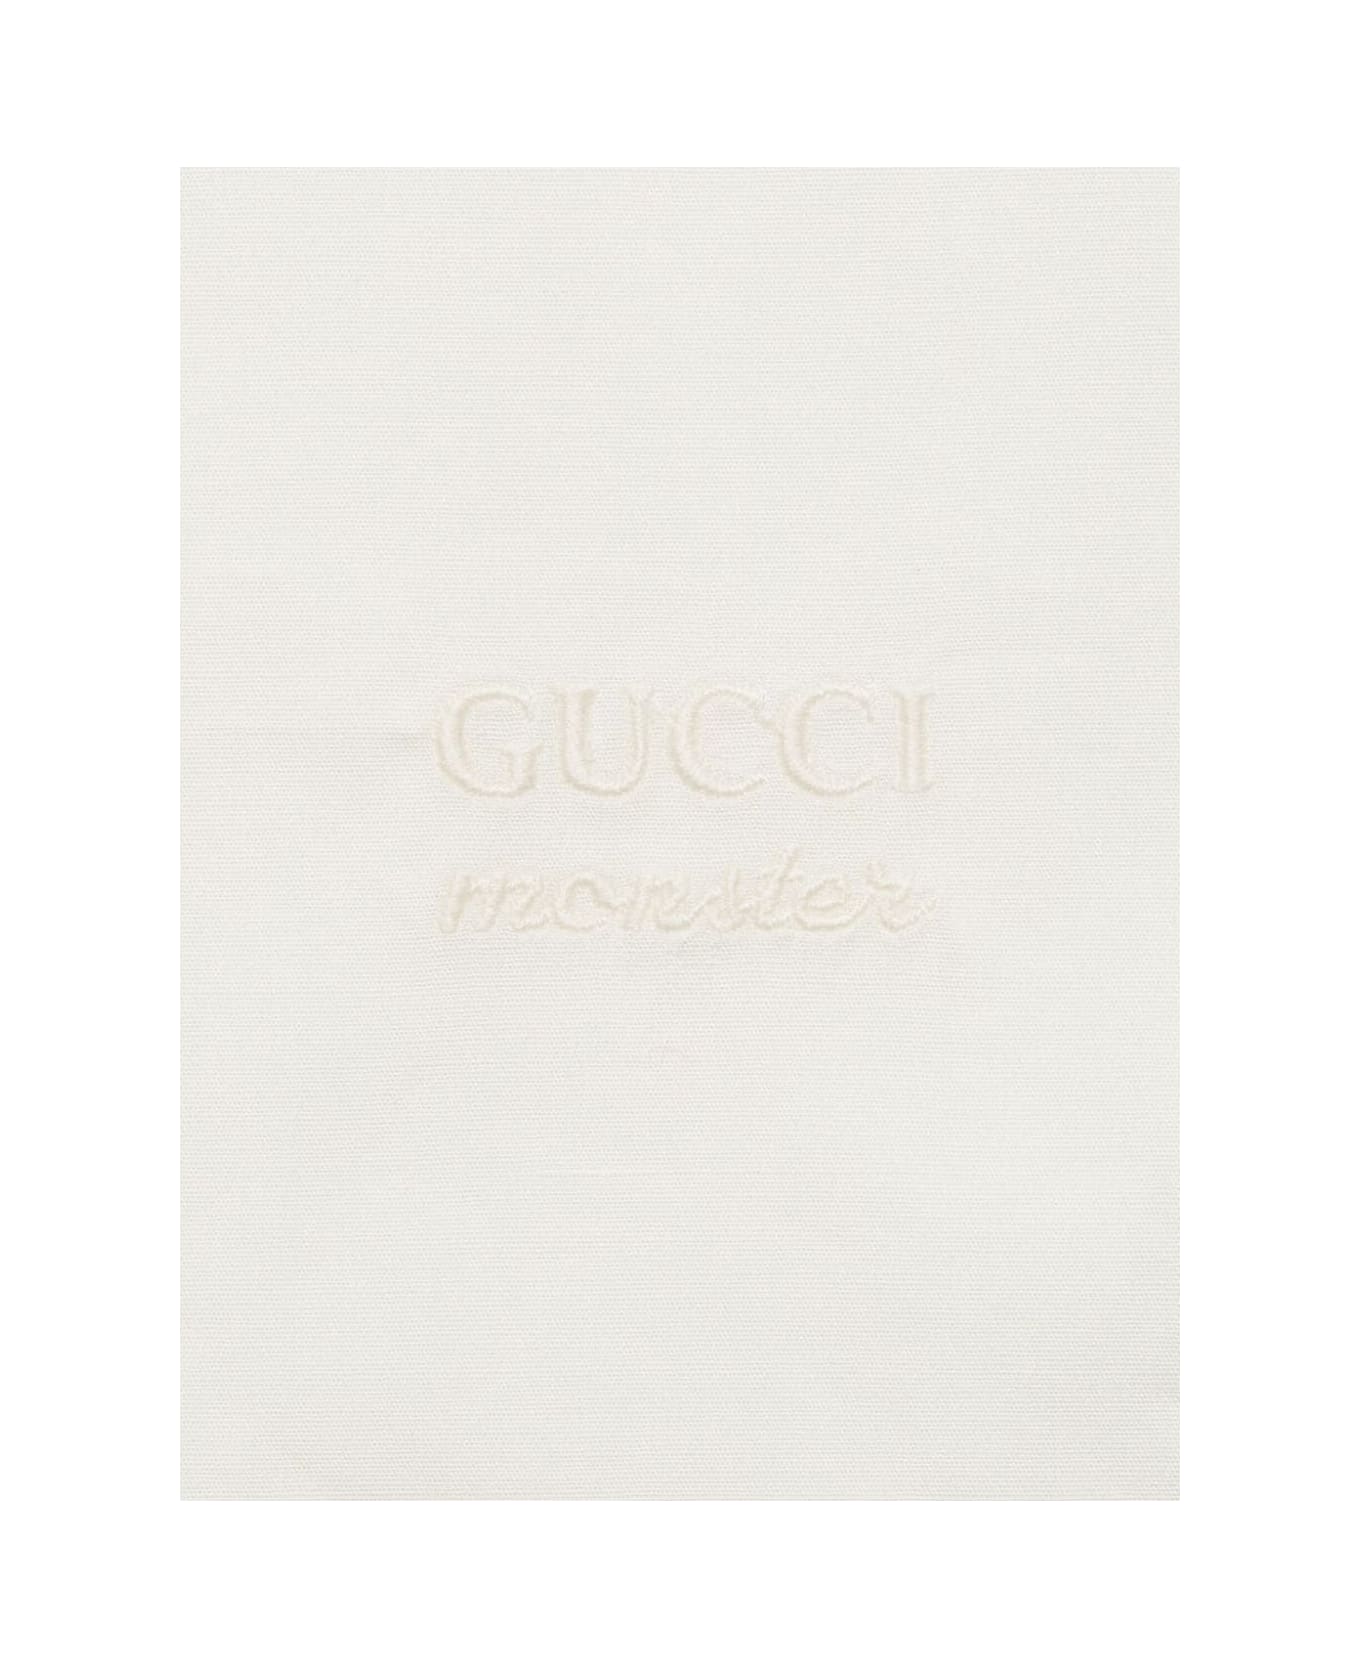 Gucci Shirt Stretch Cotton Popeline - Soft White シャツ